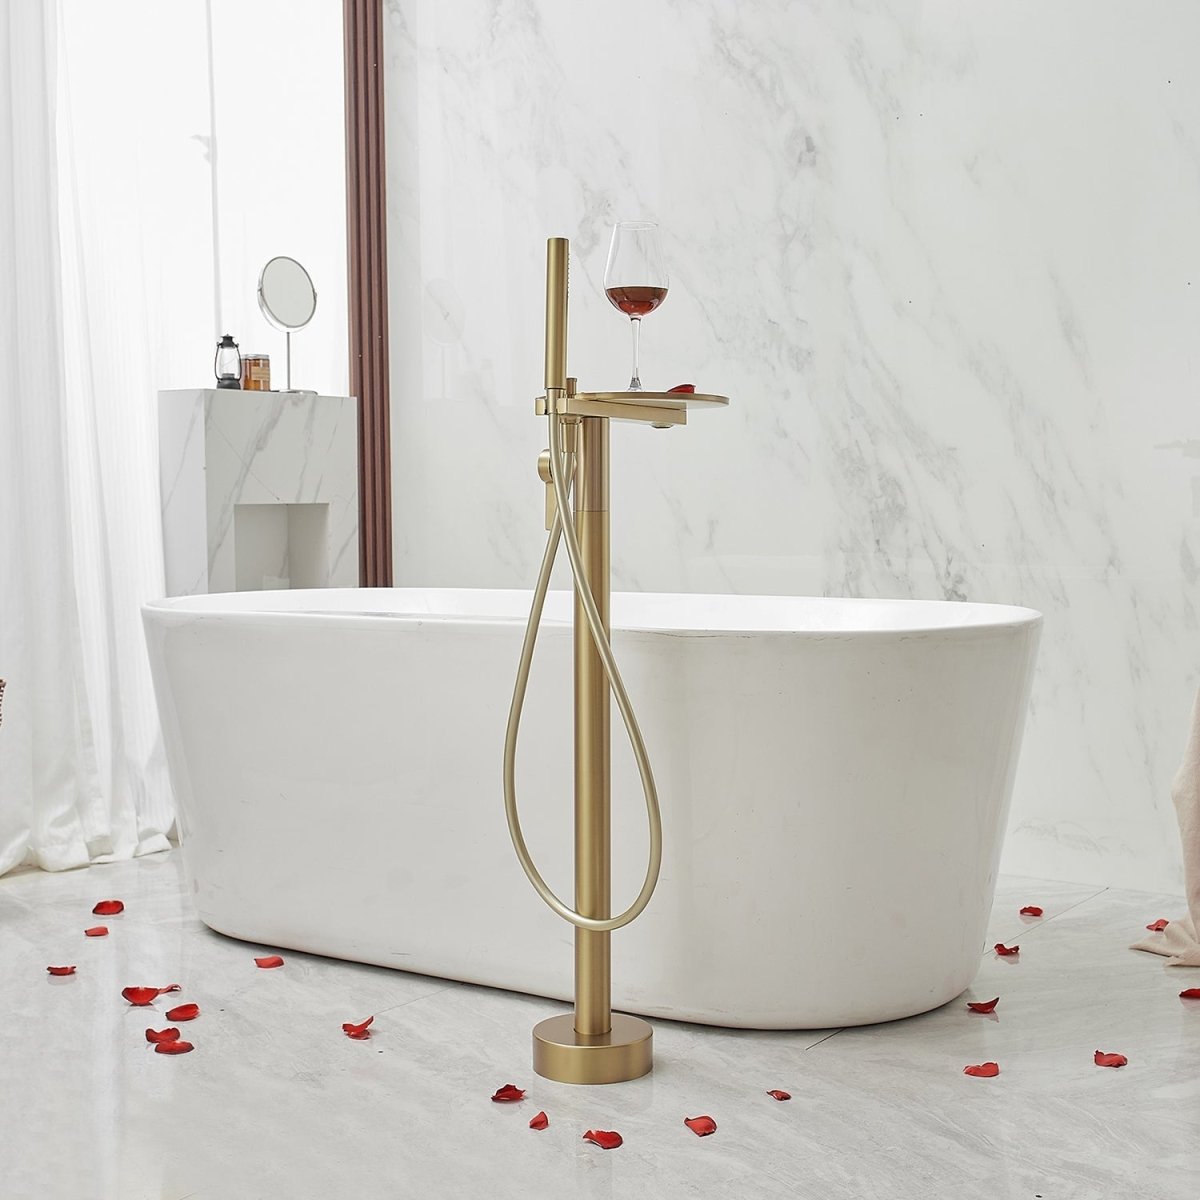 1-Handle Floor Mount Roman Tub Faucet Bathtub in Brsued Gold - buyfaucet.com